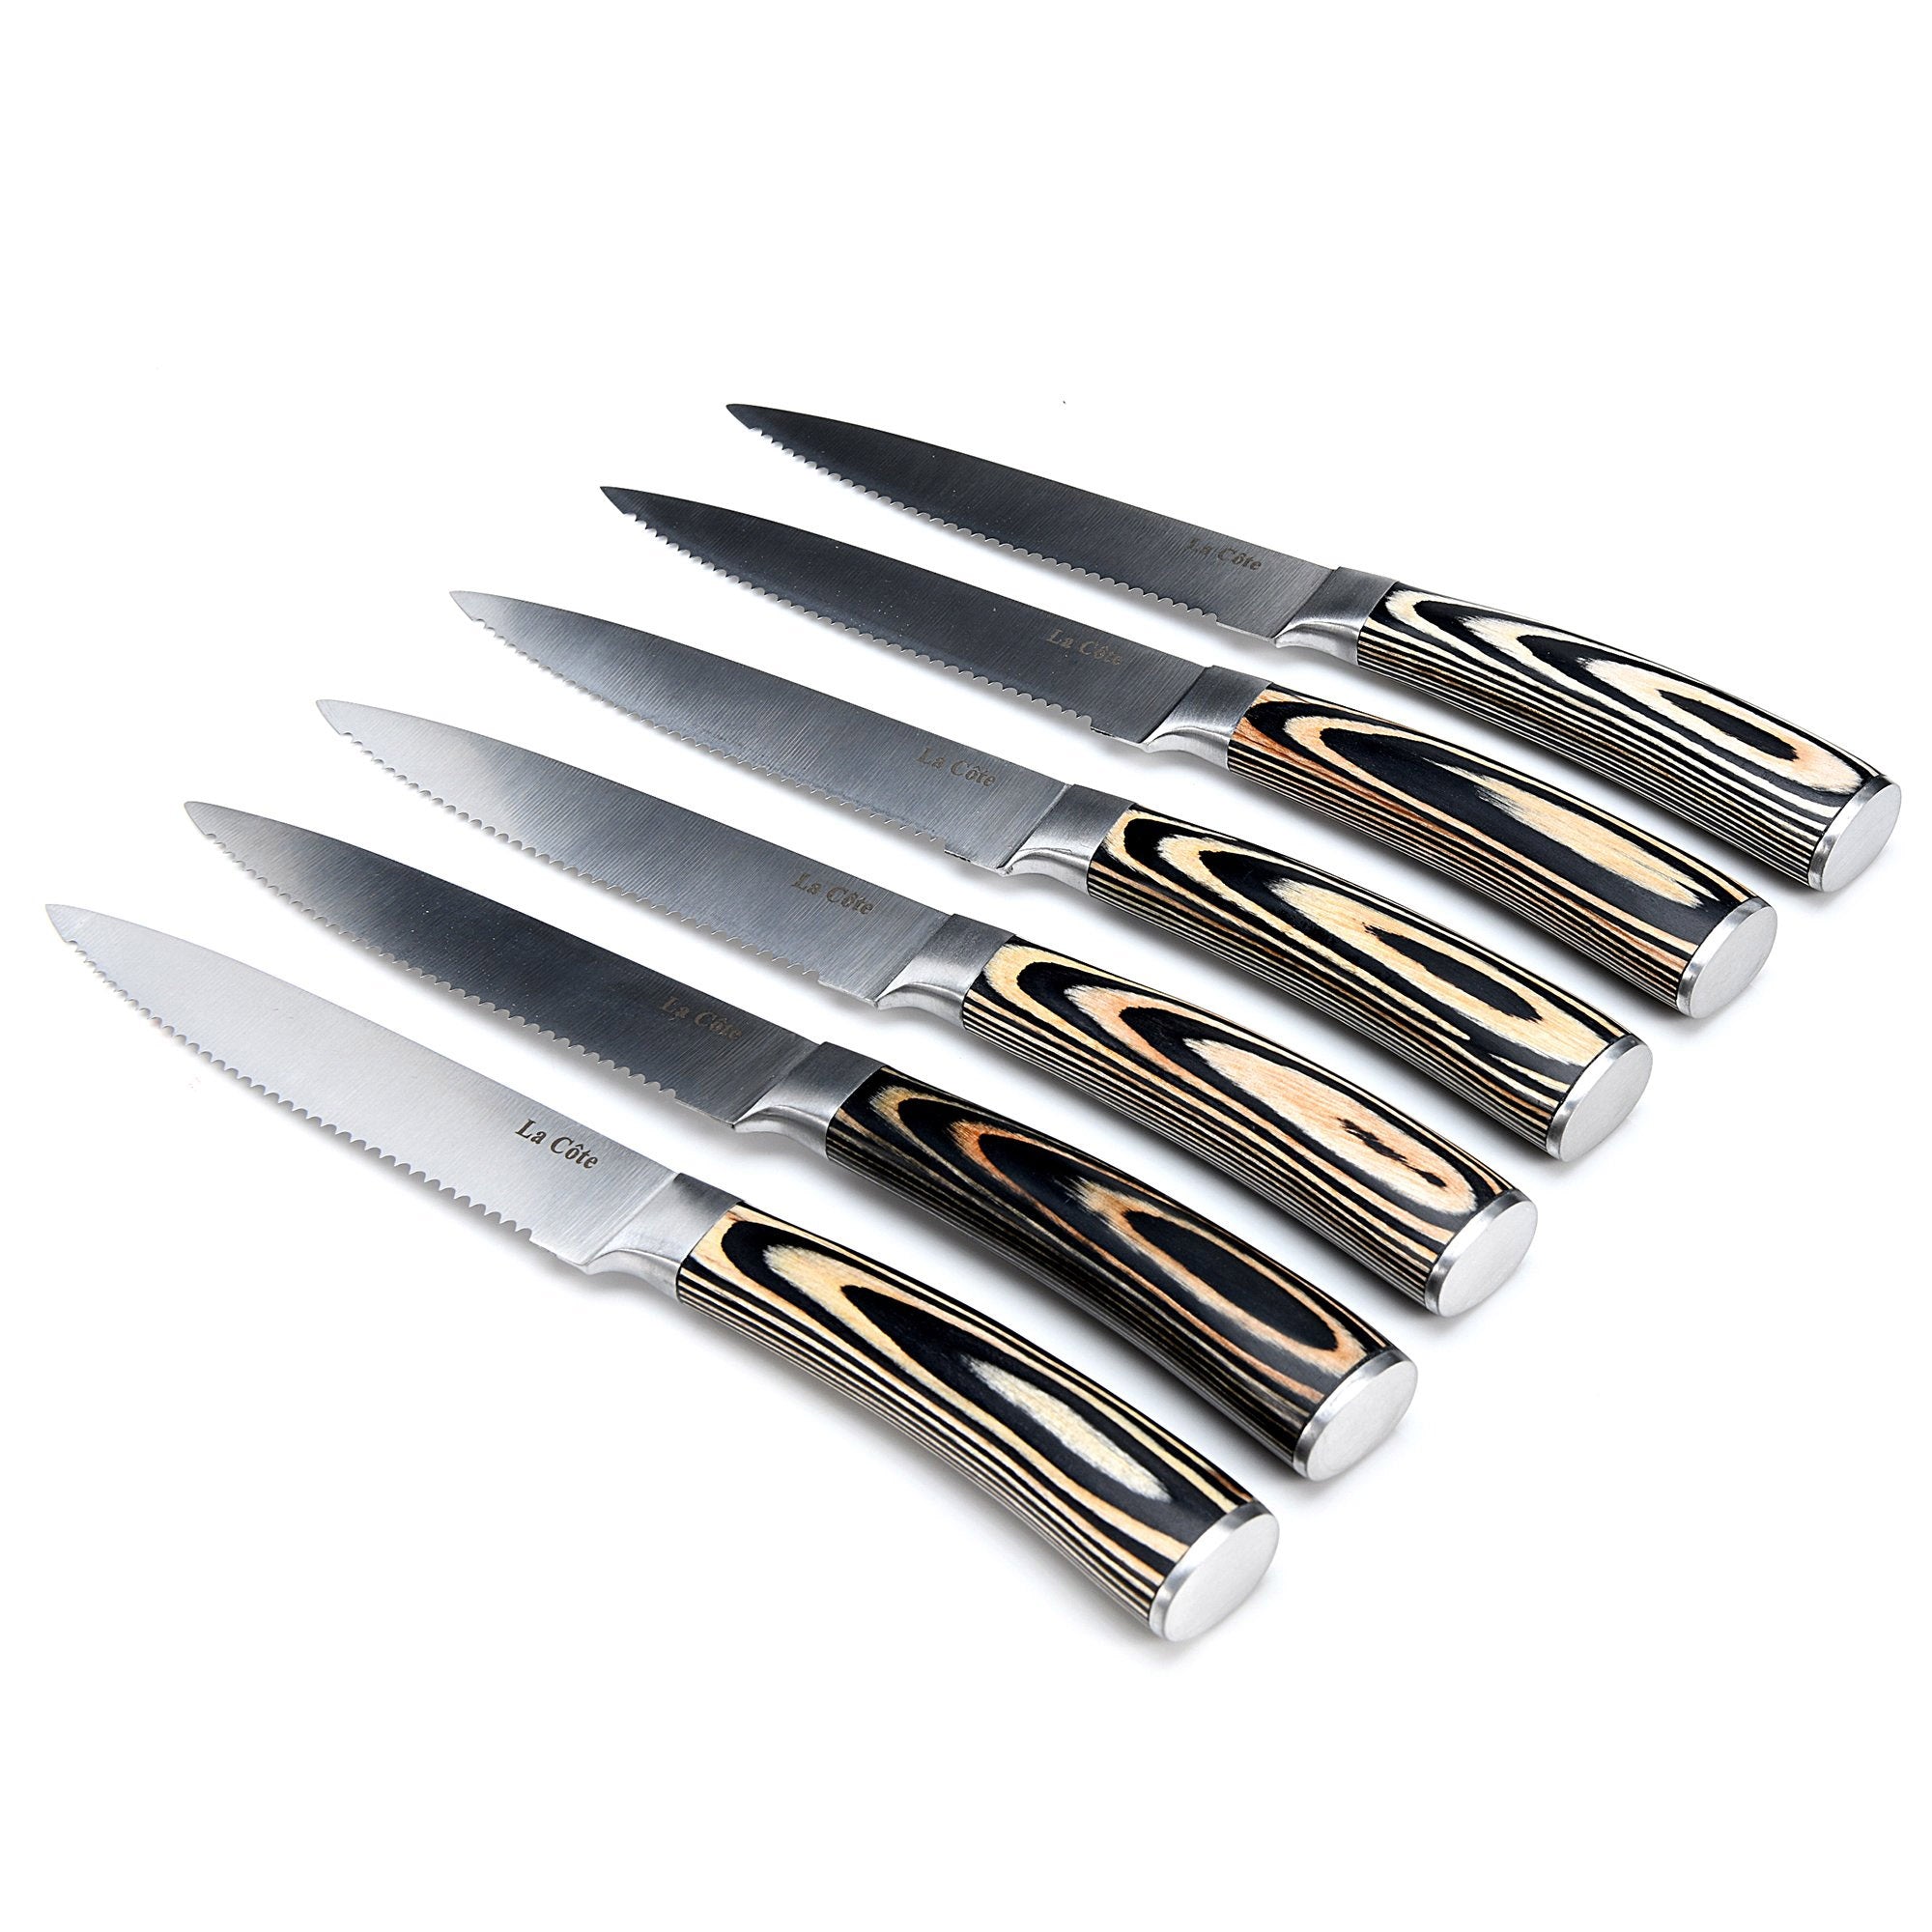 La Cote 6 Piece Steak Knives Set Japanese Stainless Steel Wood Handle In Bamboo Storage Box (Pakka Wood - Zebra)